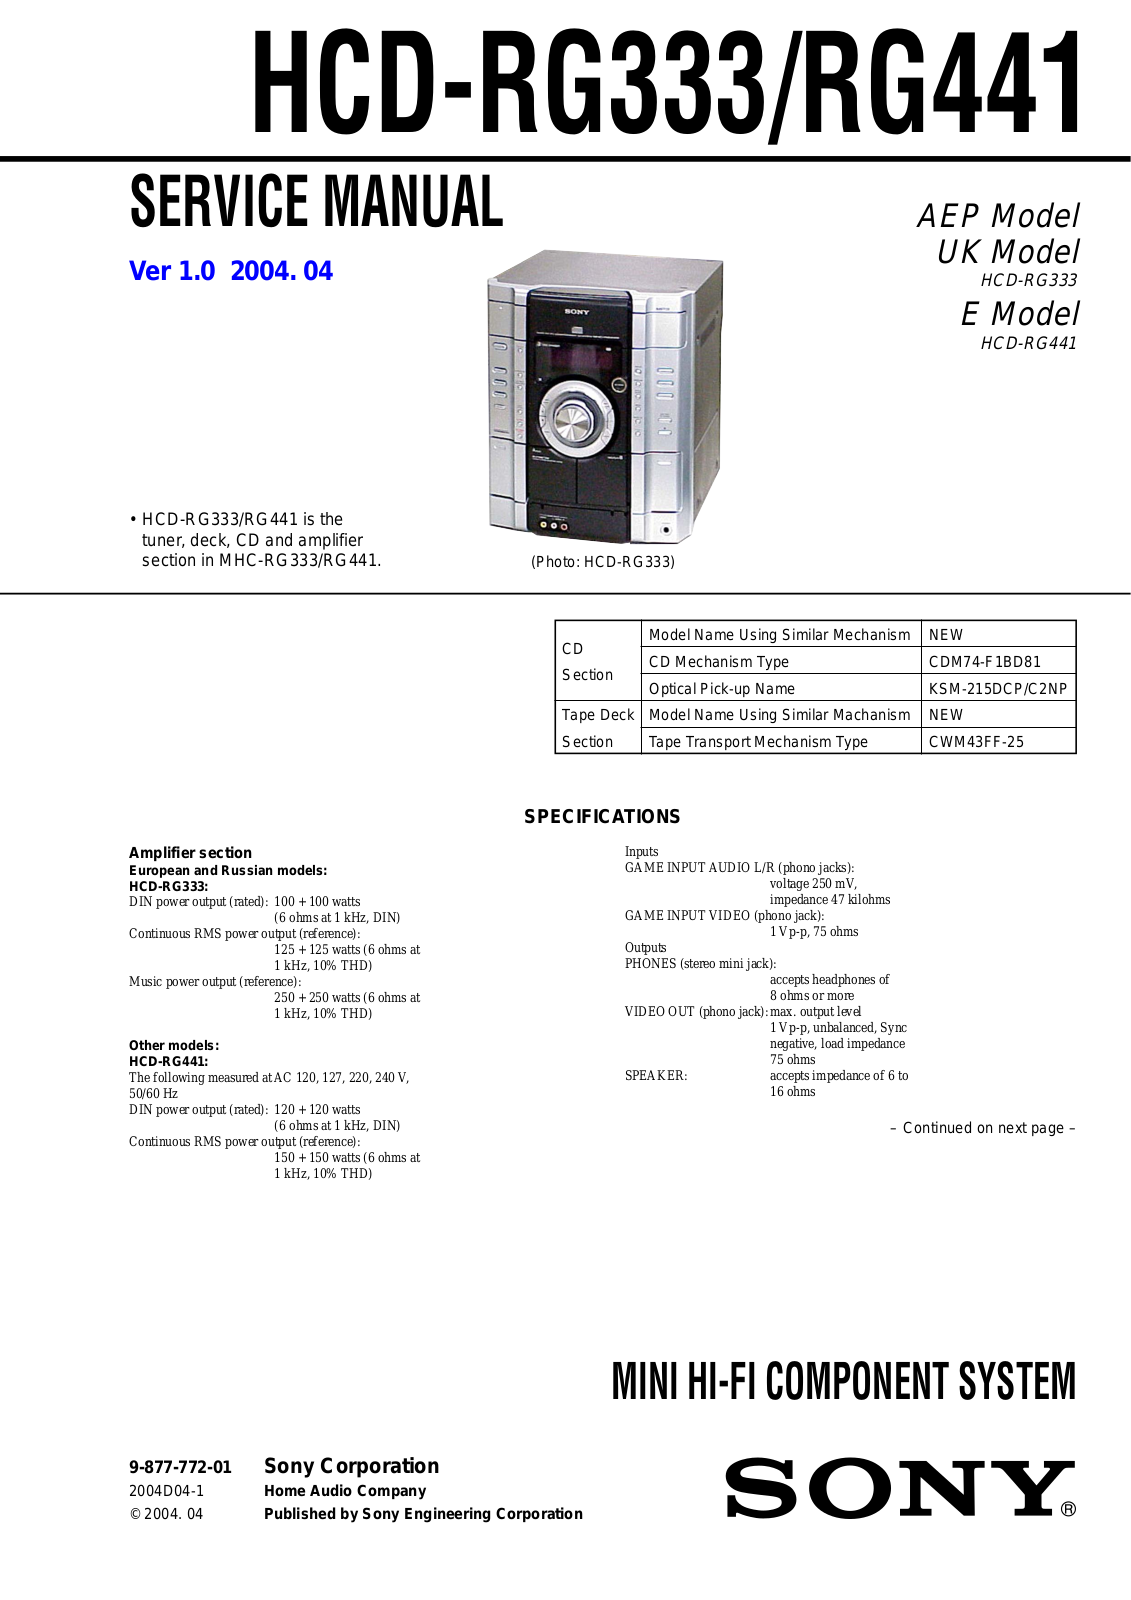 Sony HCD-RG333, HCD-RG441 Service Manual